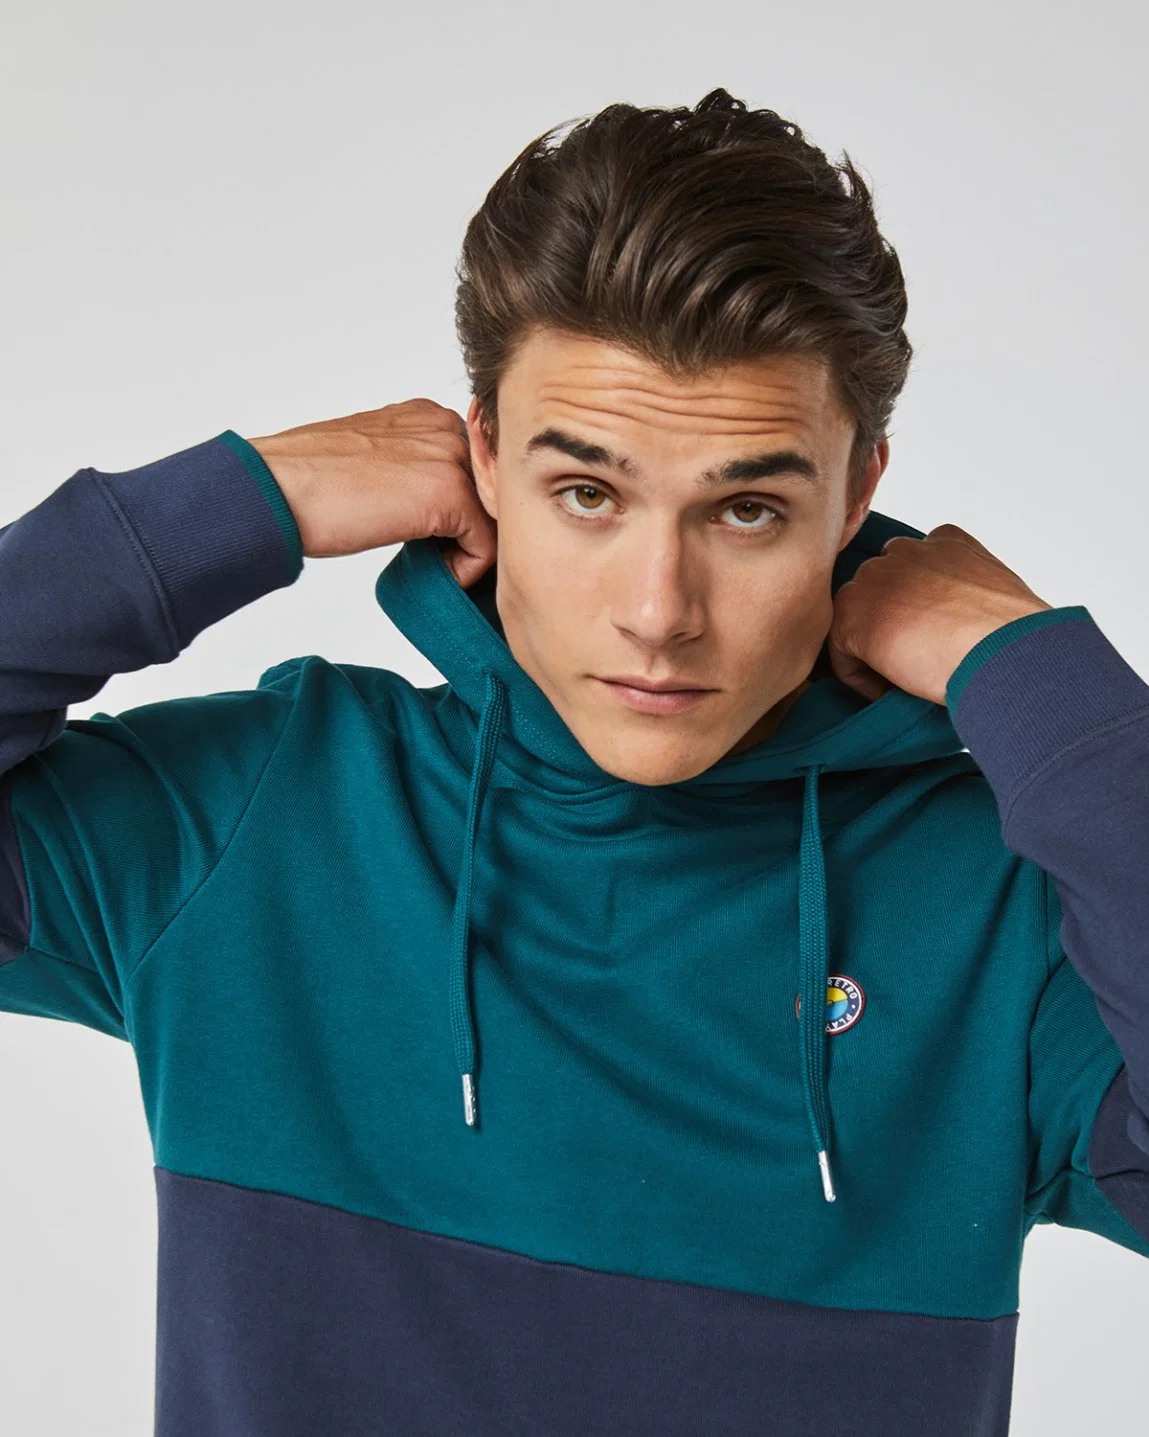 Men Fashion Long Sleeve Jumper Sweater Sports Wear with Hoodie